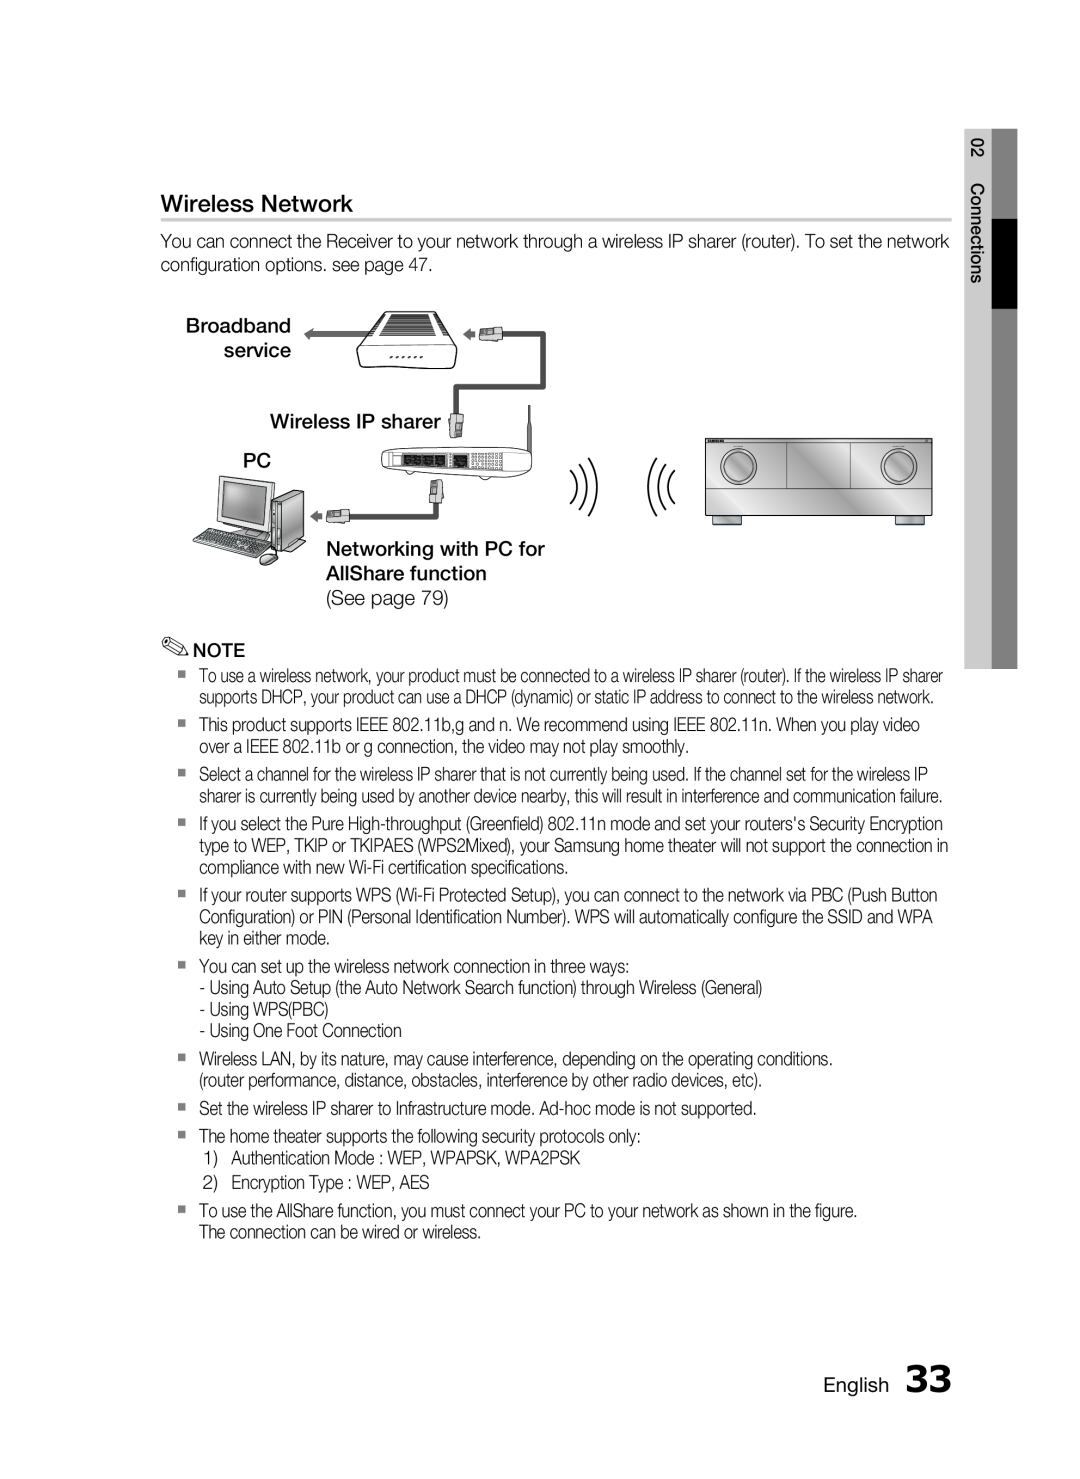 Samsung HW-D7000 user manual Wireless Network, Broadband service Wireless IP sharer PC, English 